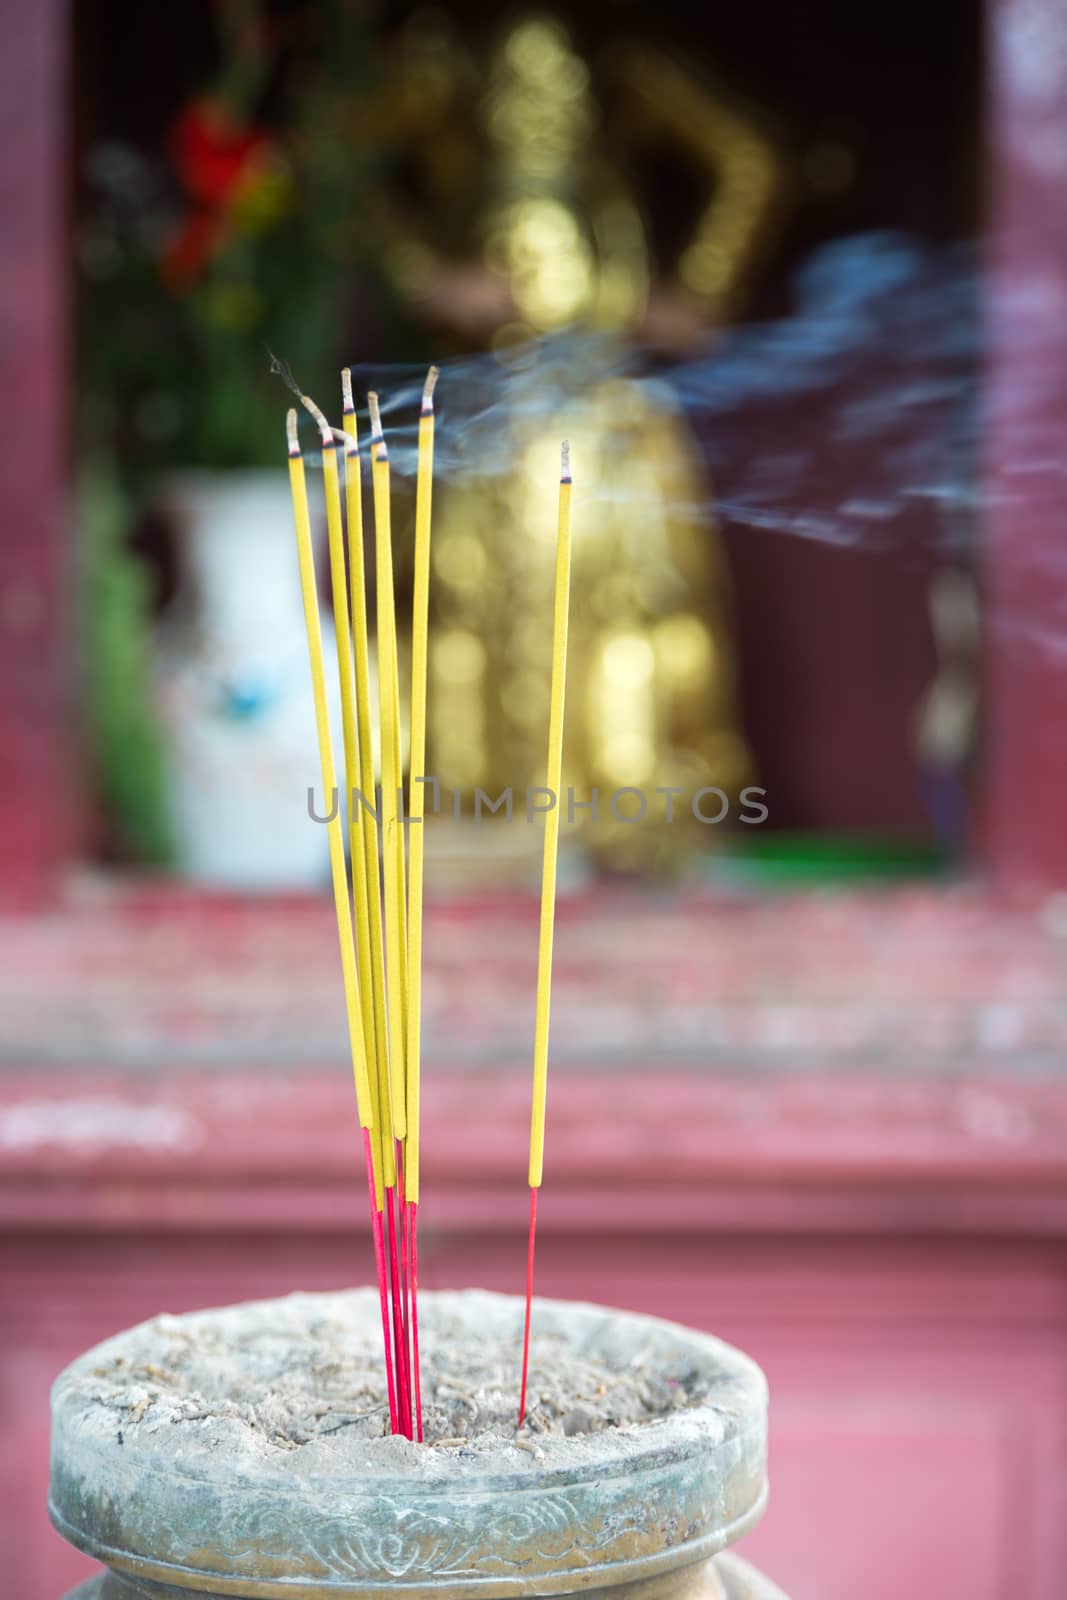 Burning joss sticks in pagoda, Saigon, Vietnam by fisfra